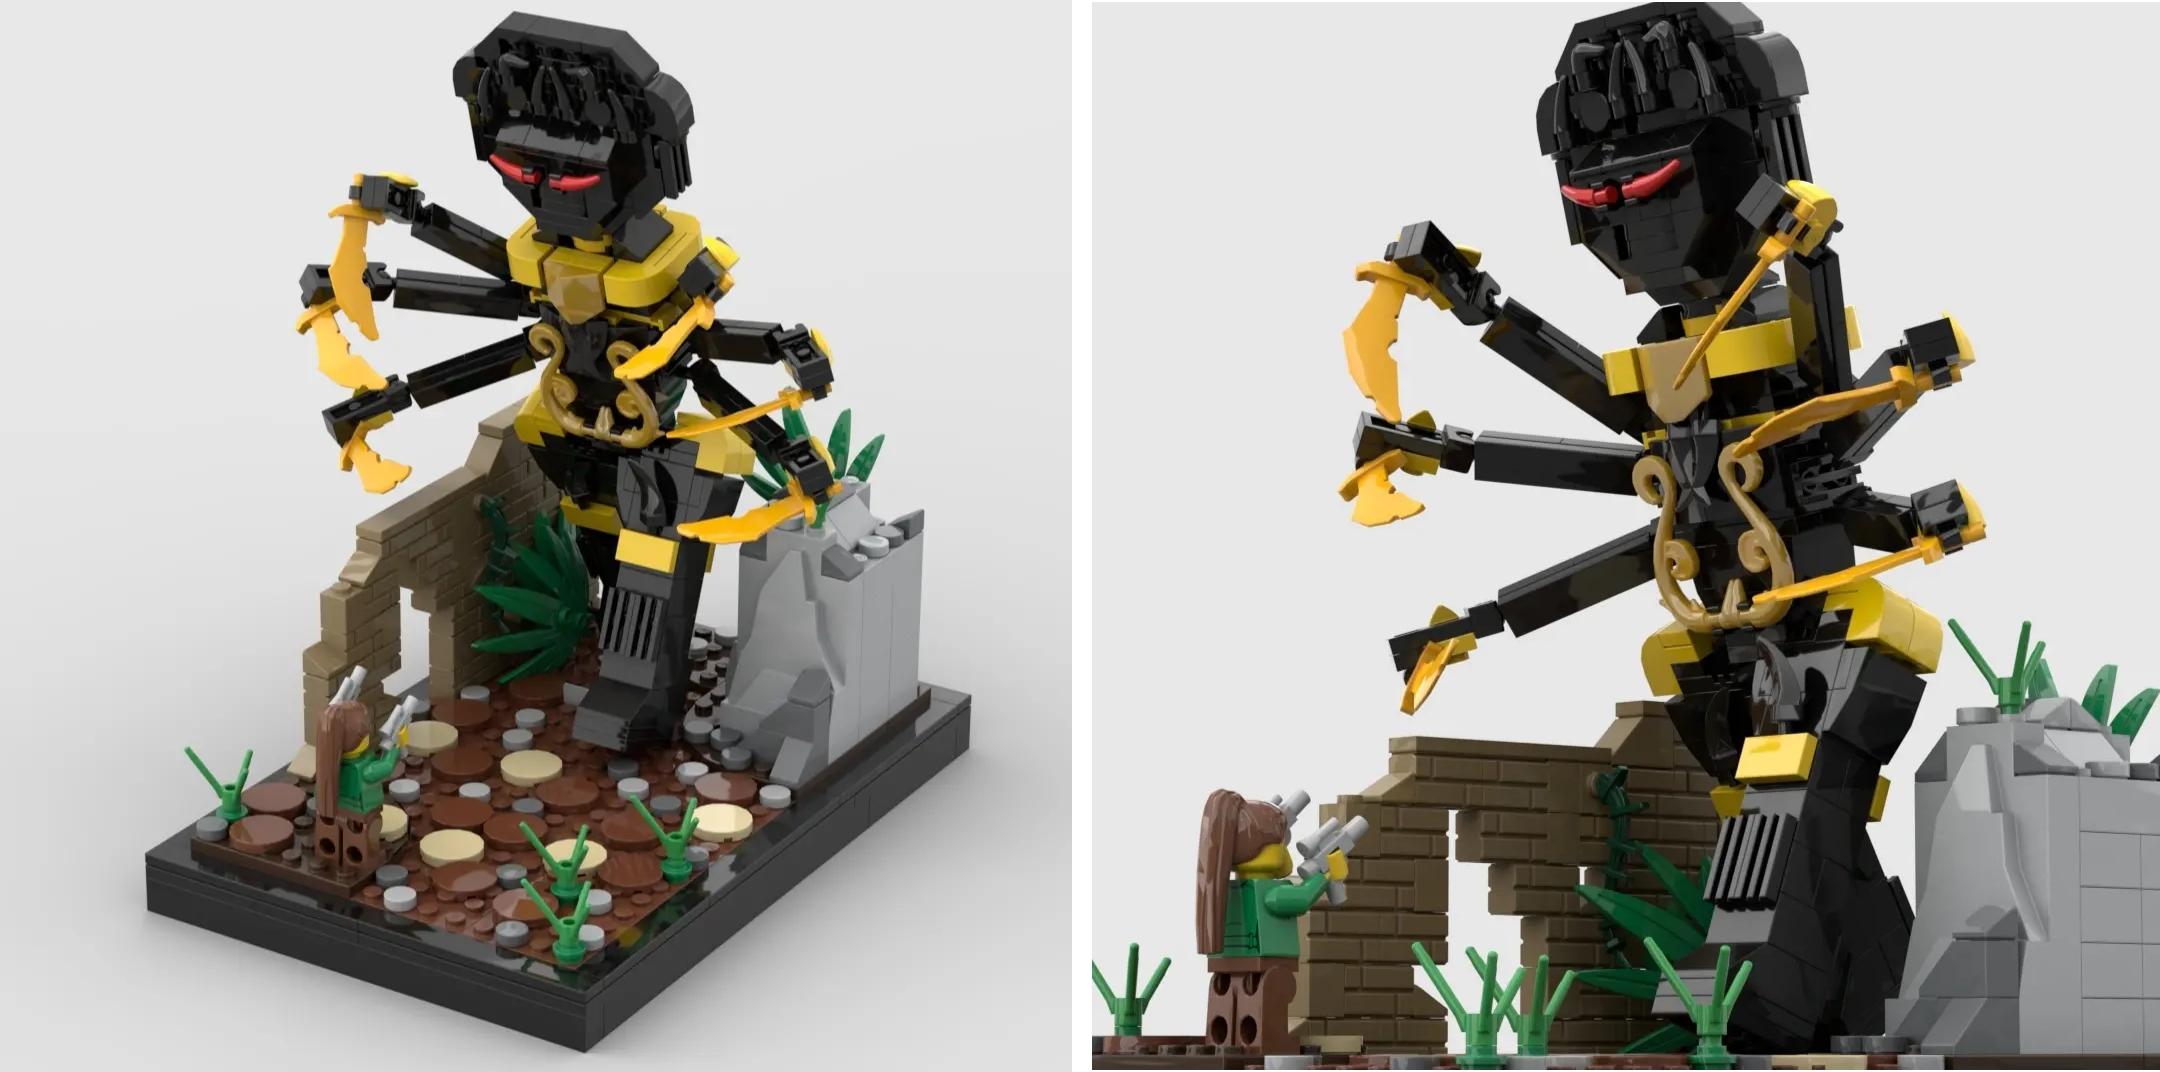 Tomb Raider level sets (Shiva Statue) made with LEGO Bricklink Studio.